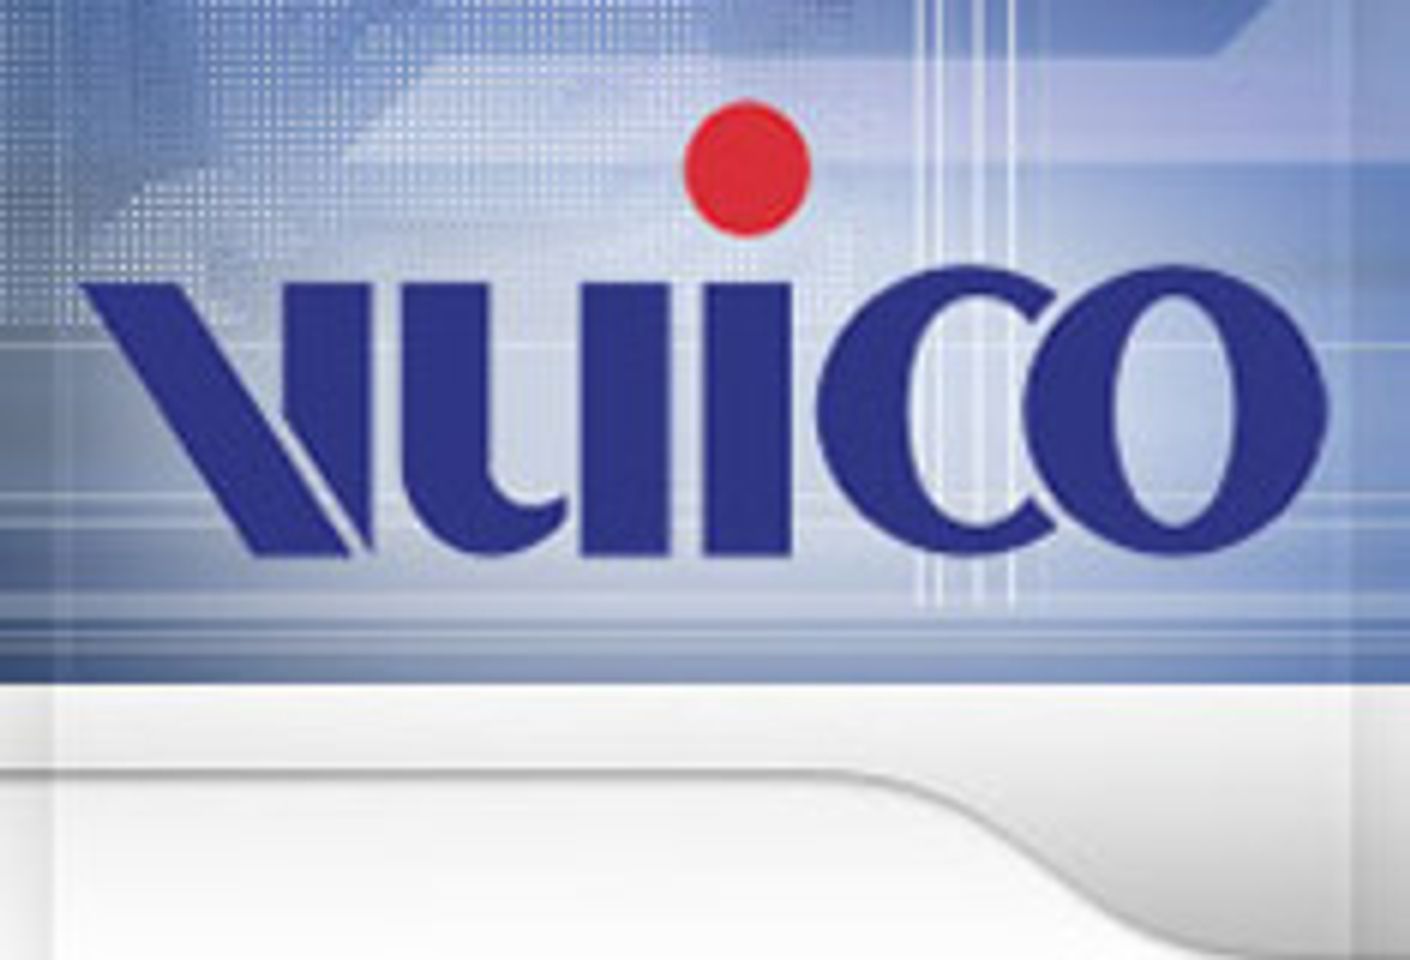 Vuico Announces Universal Mobile Video Player